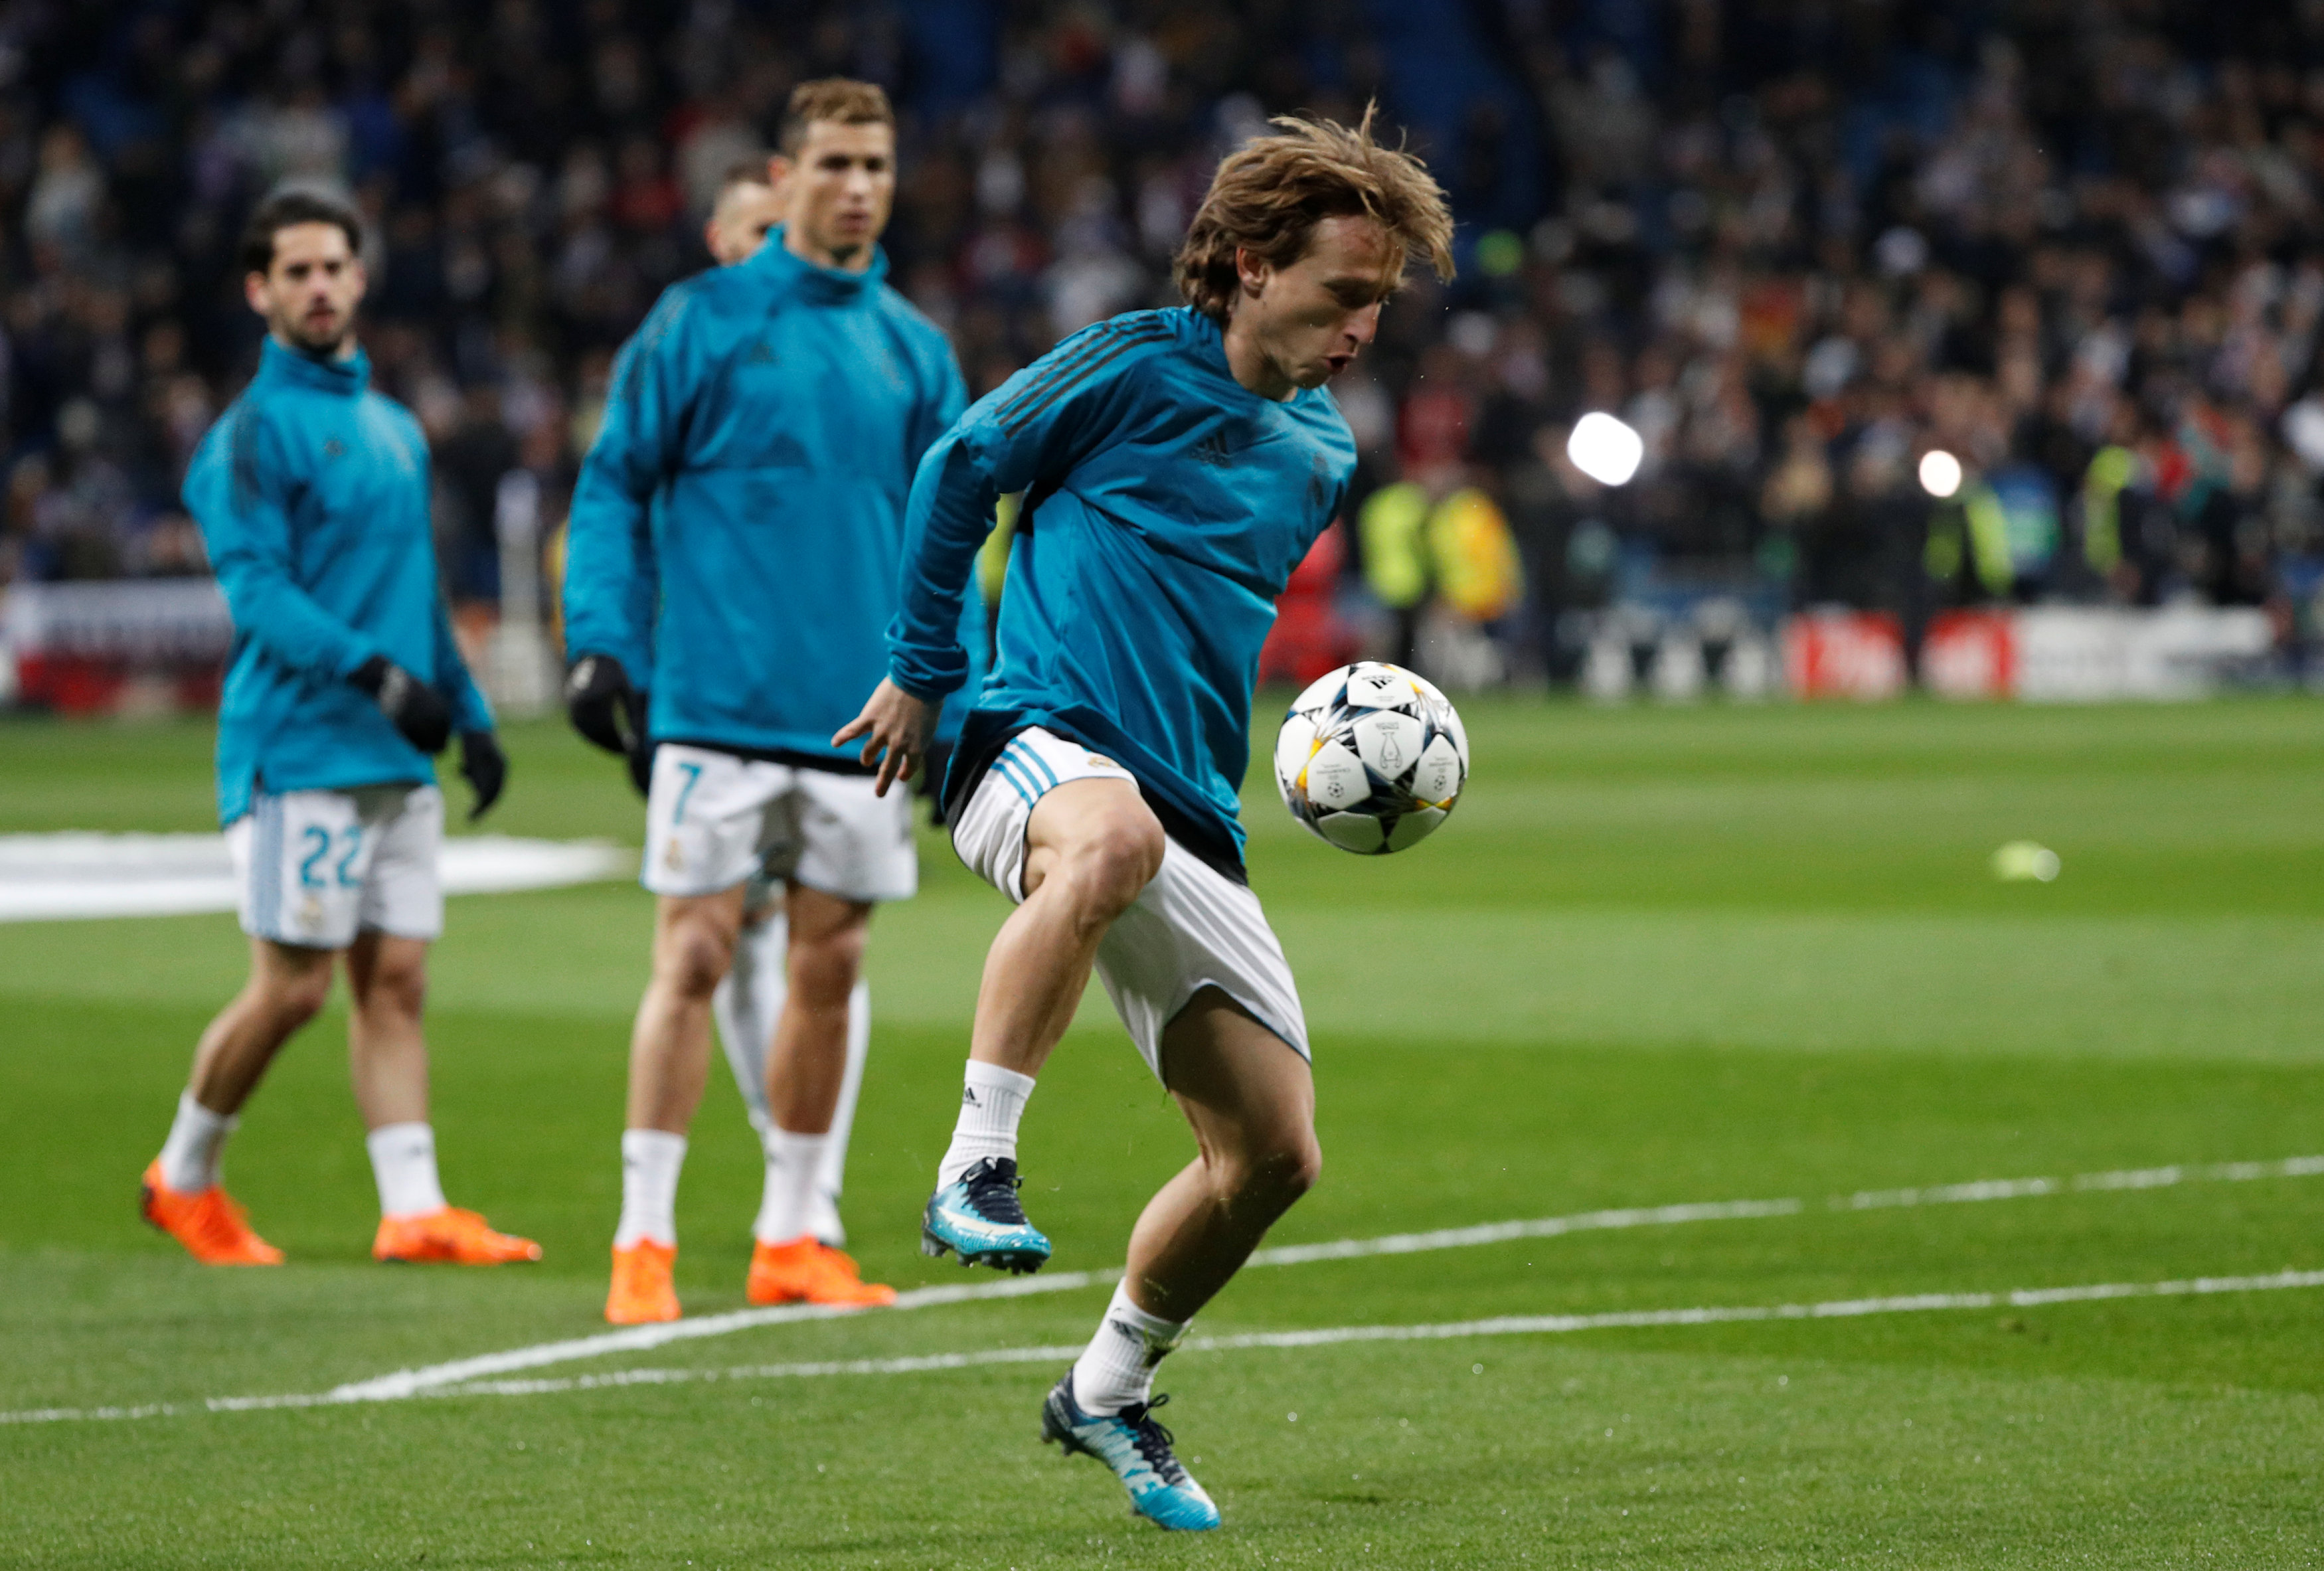 Football: Real's Modric, Marcelo doubtful for PSG match